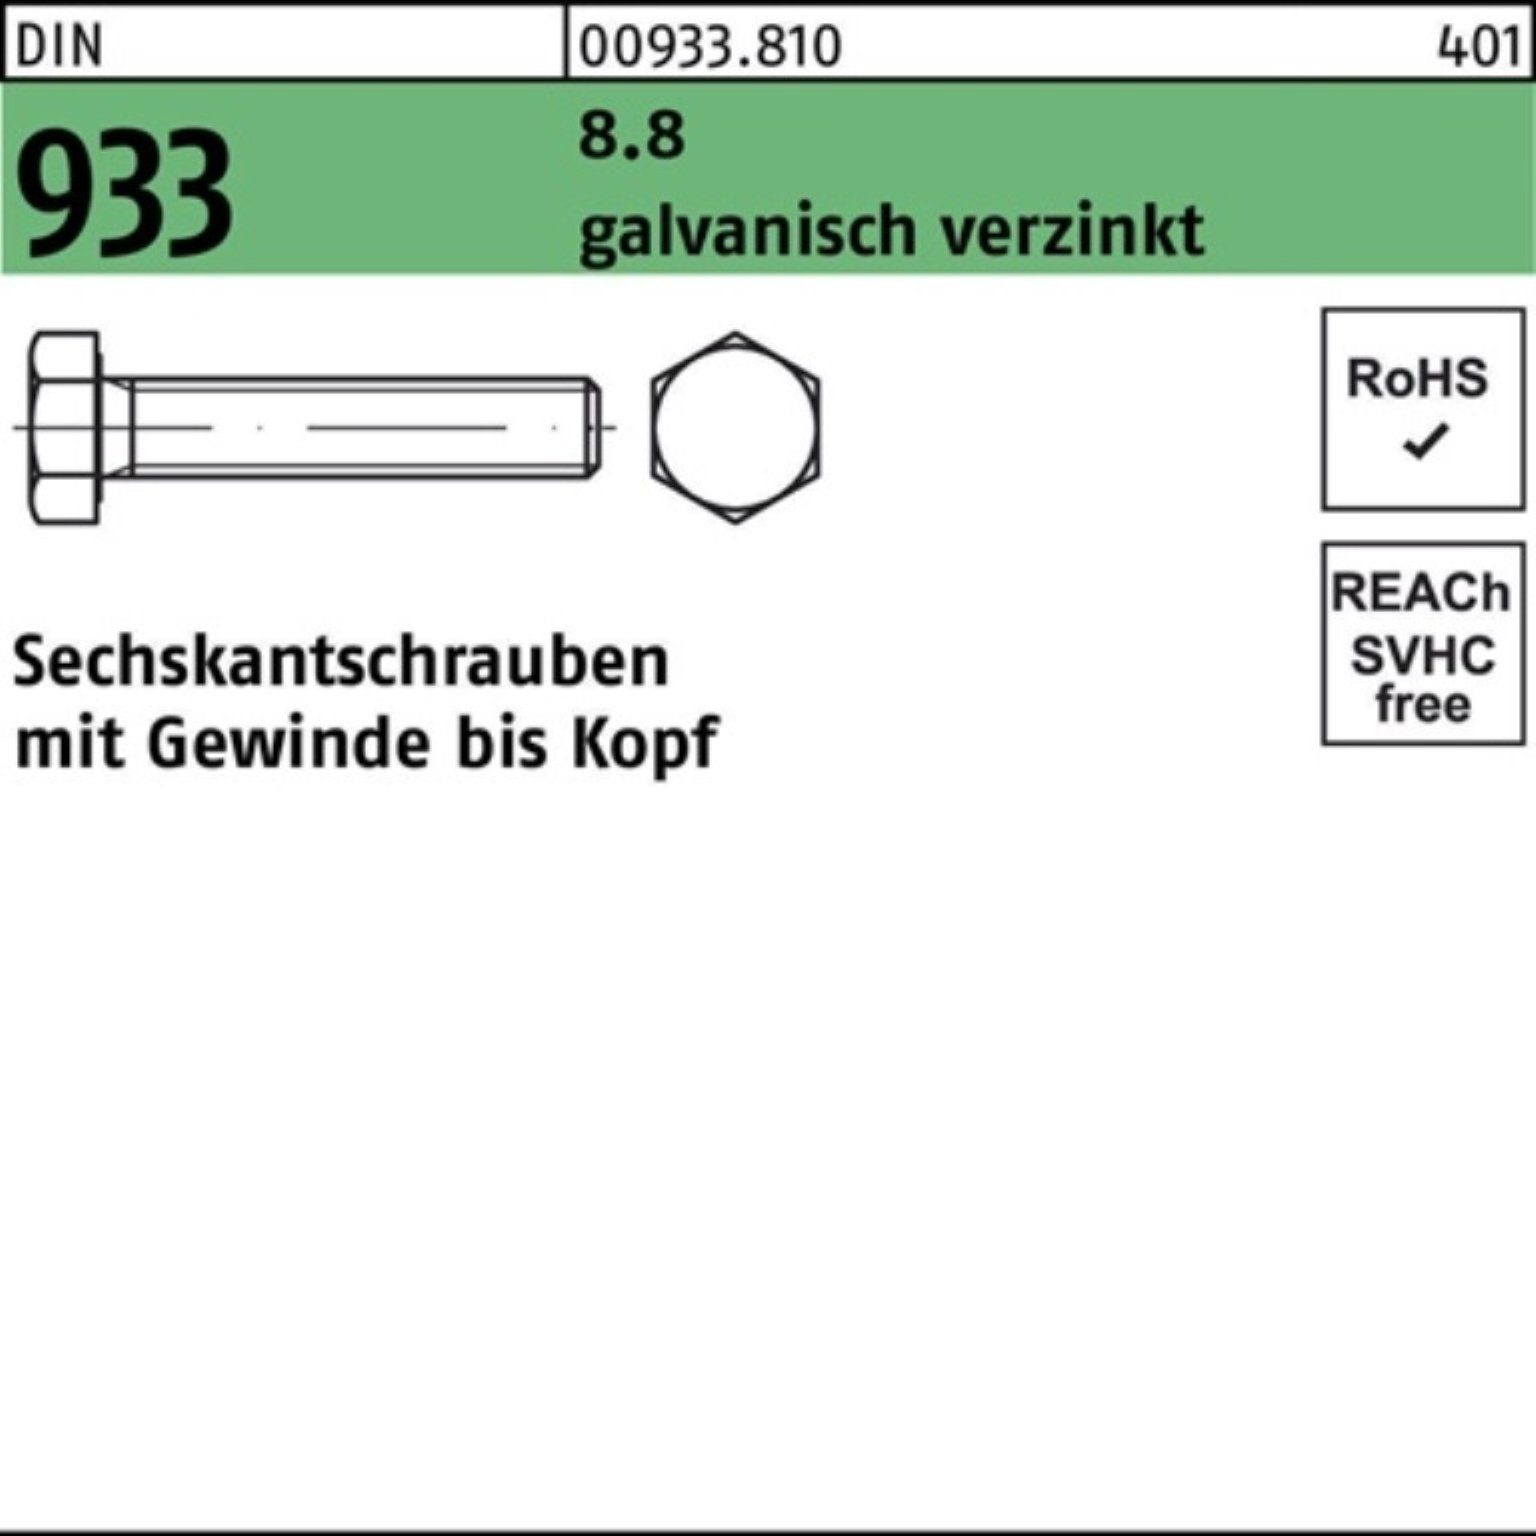 Reyher Sechskantschraube 100er 933 Sechskantschraube DIN Stü 8.8 18 100 galv.verz. VG Pack M6x